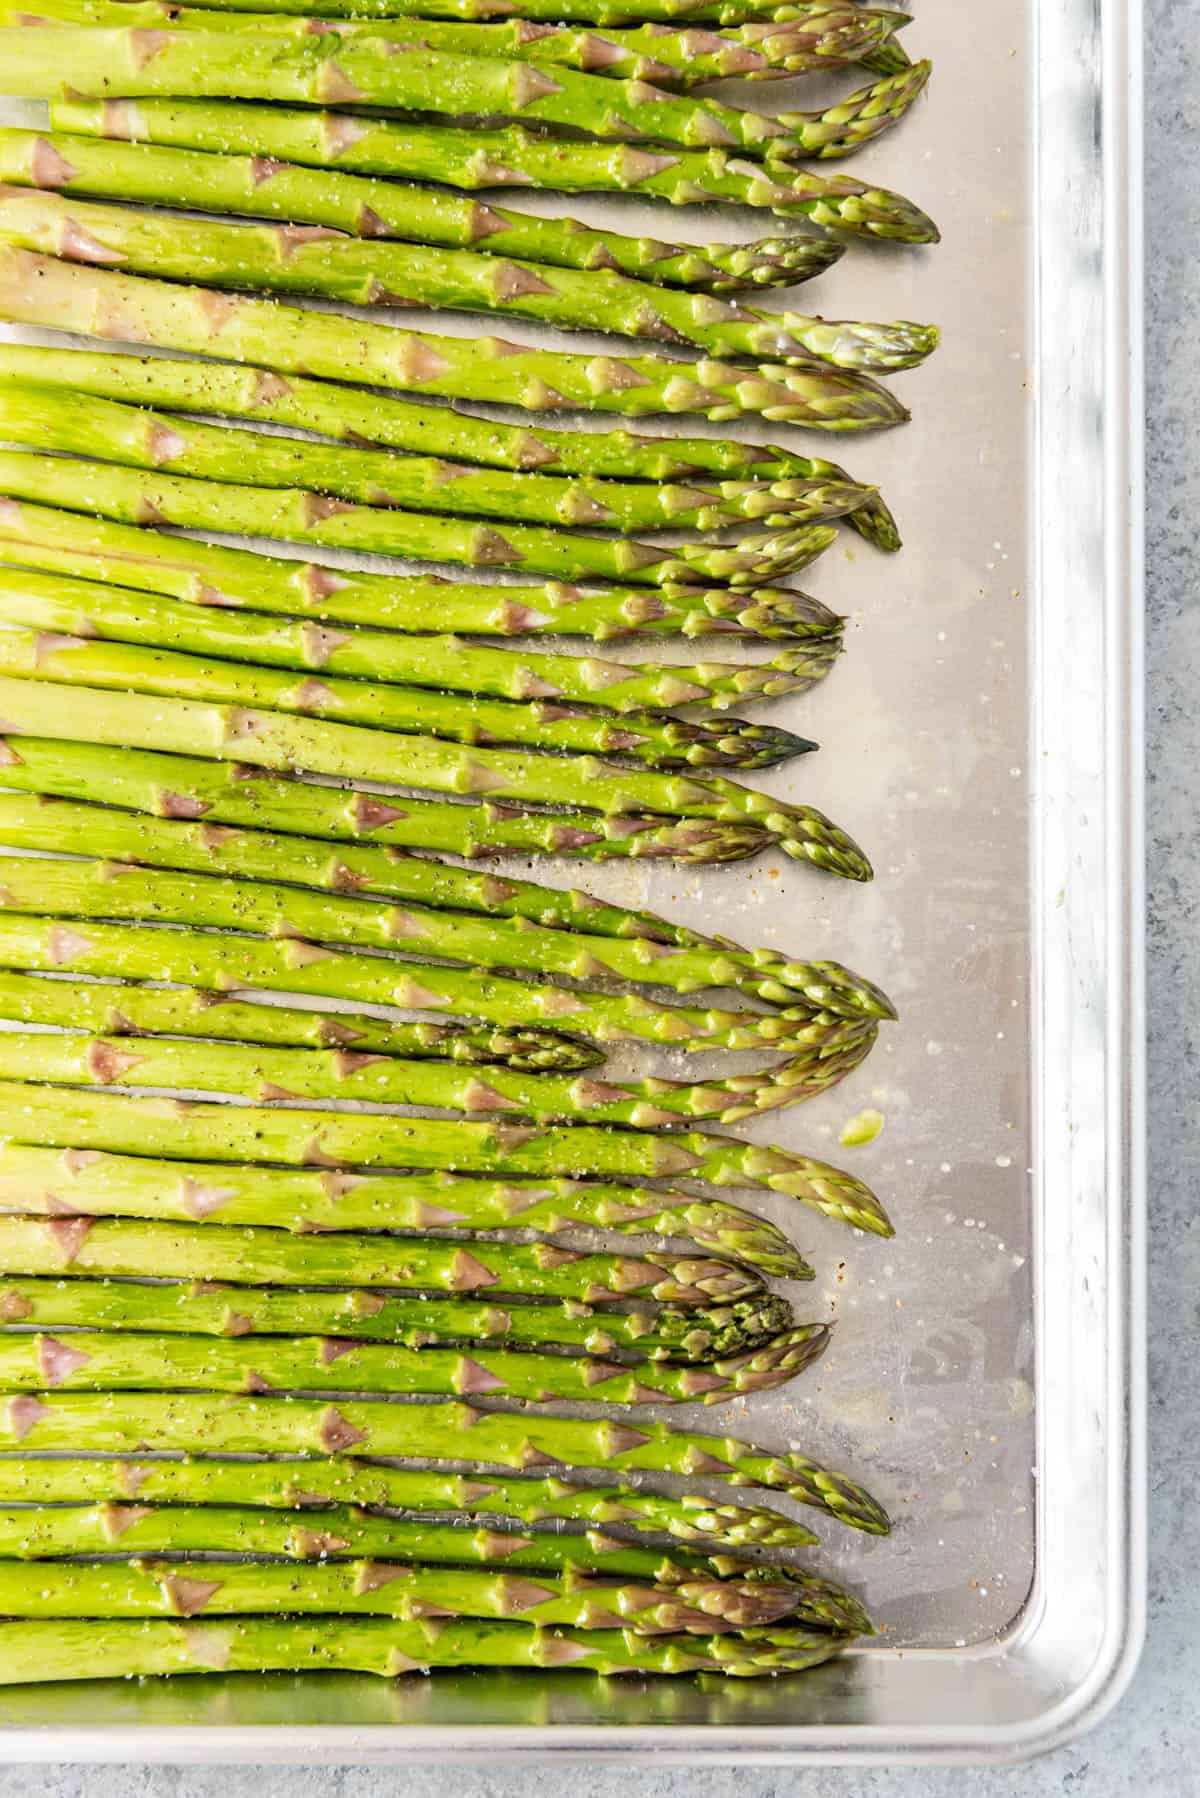 A row of green asparagus on a baking sheet.